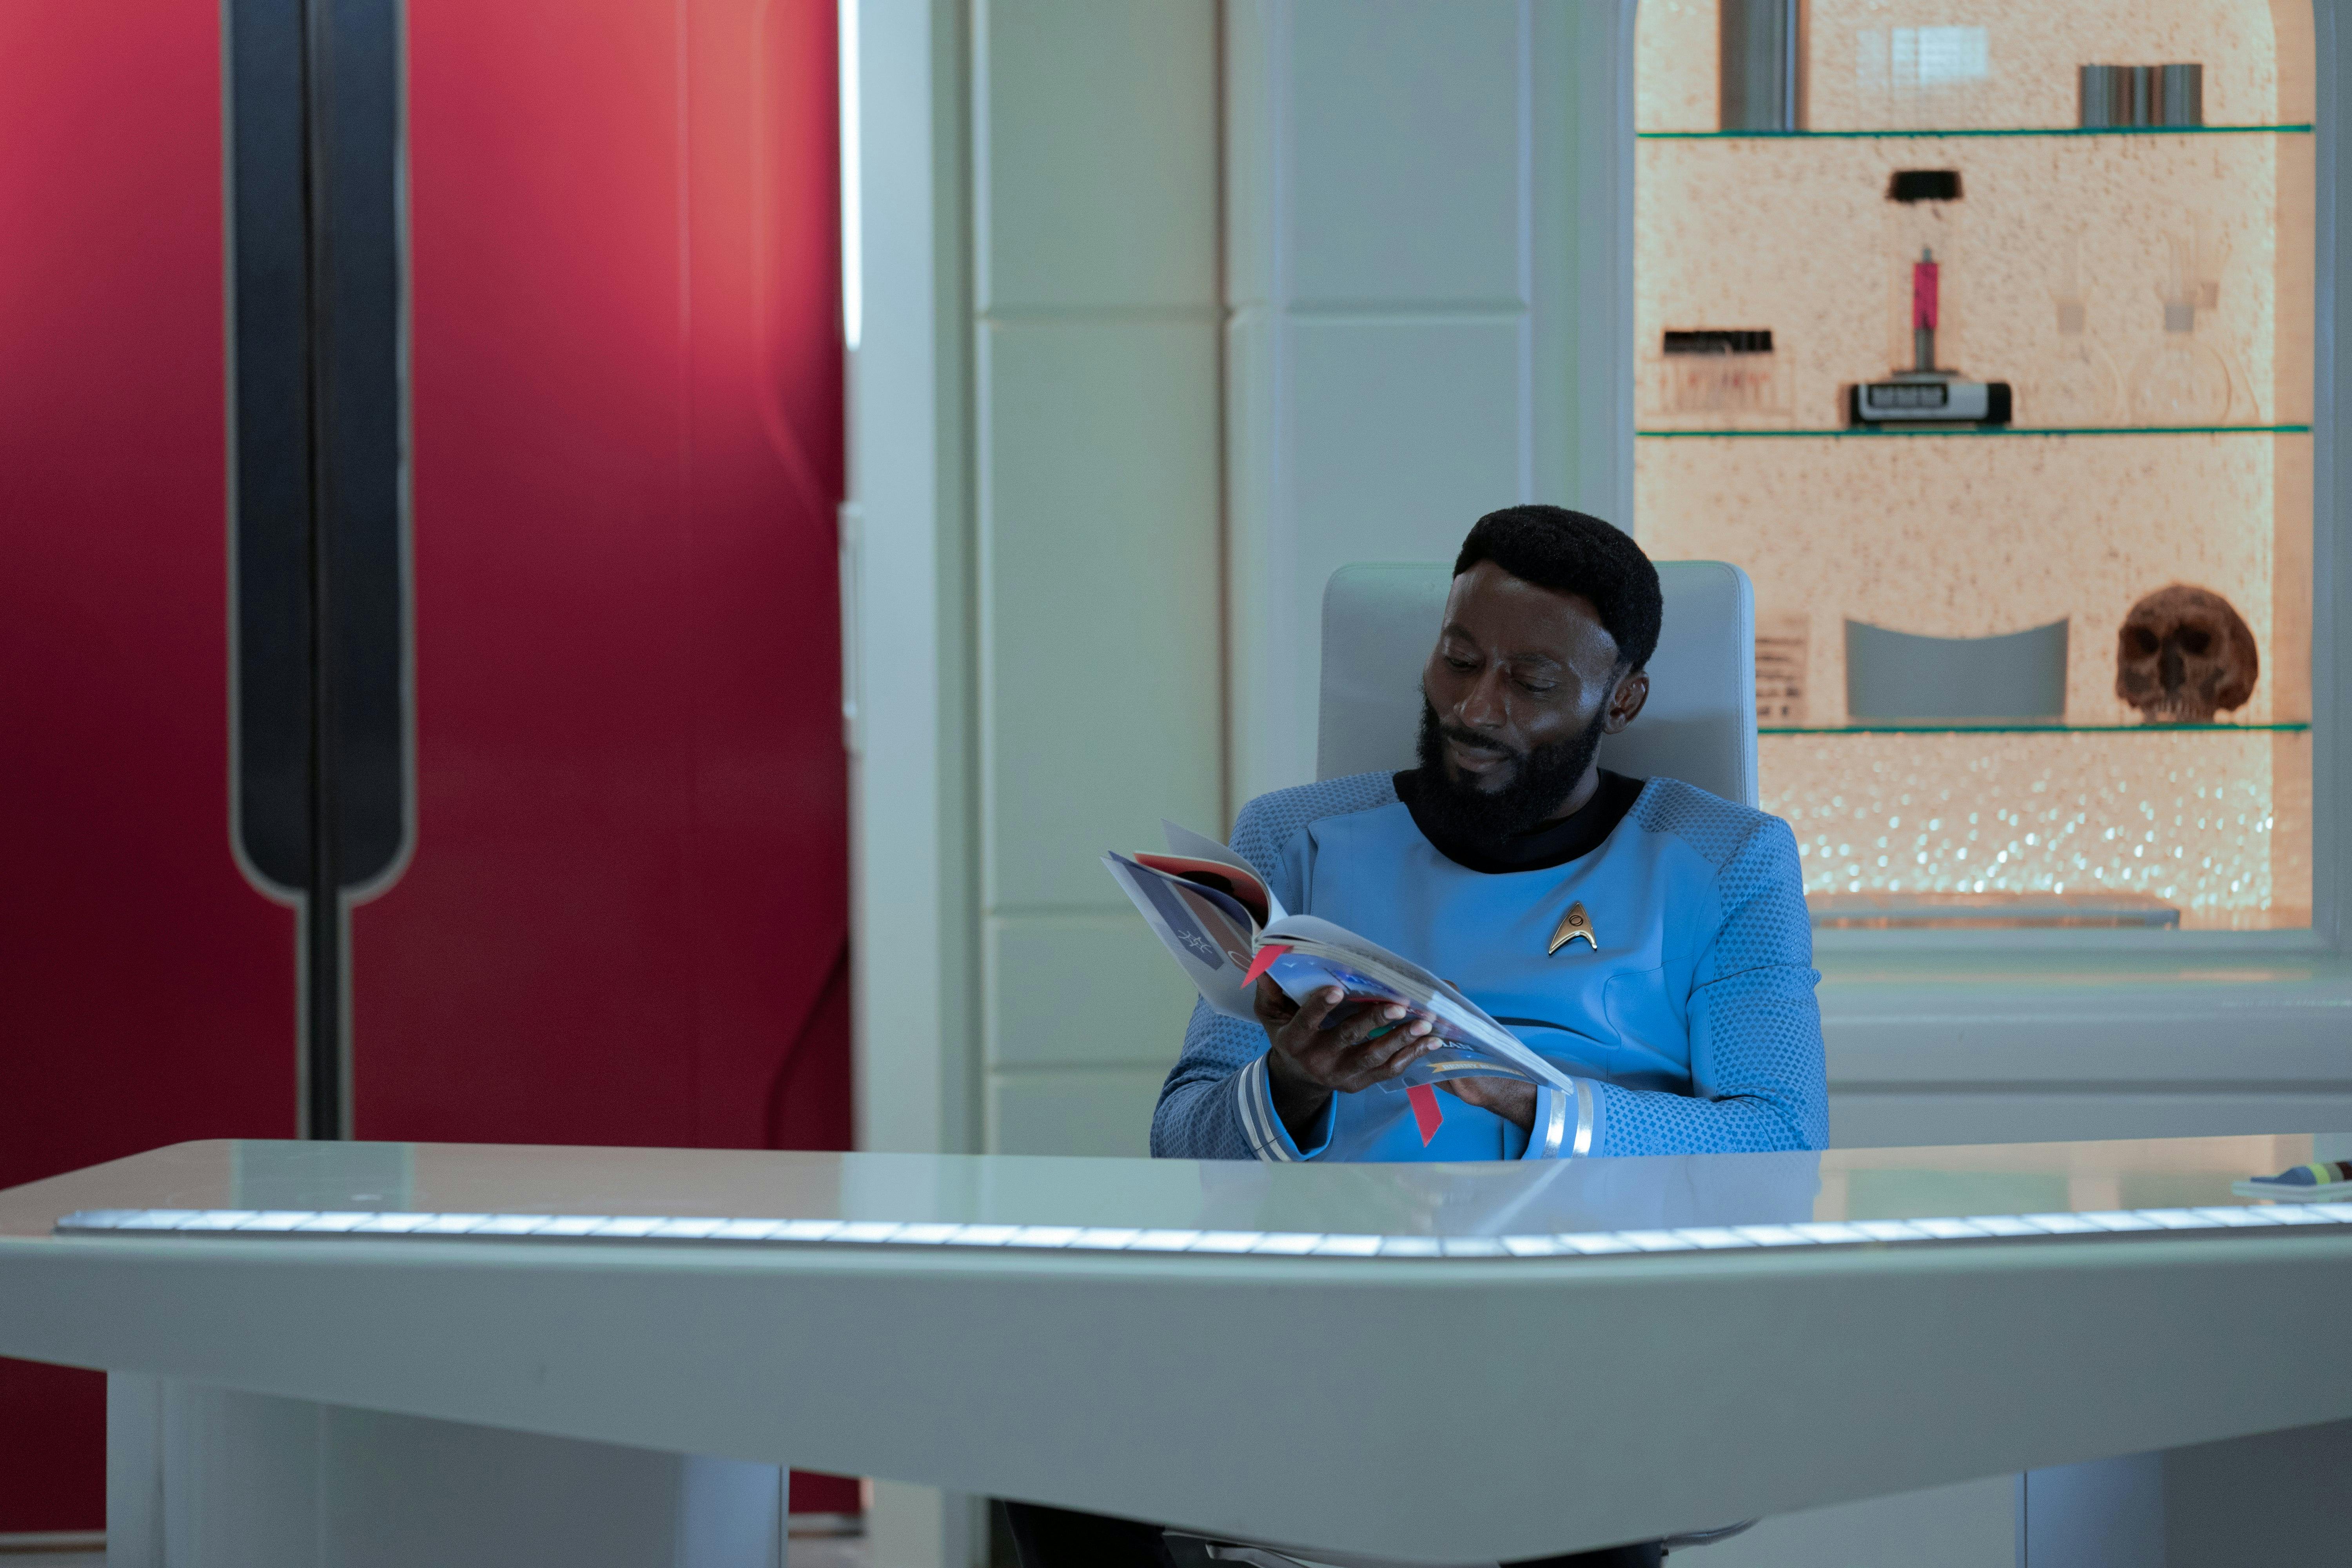 Dr. M'Benga (Babs Olusanmokun) reads a book at his desk.